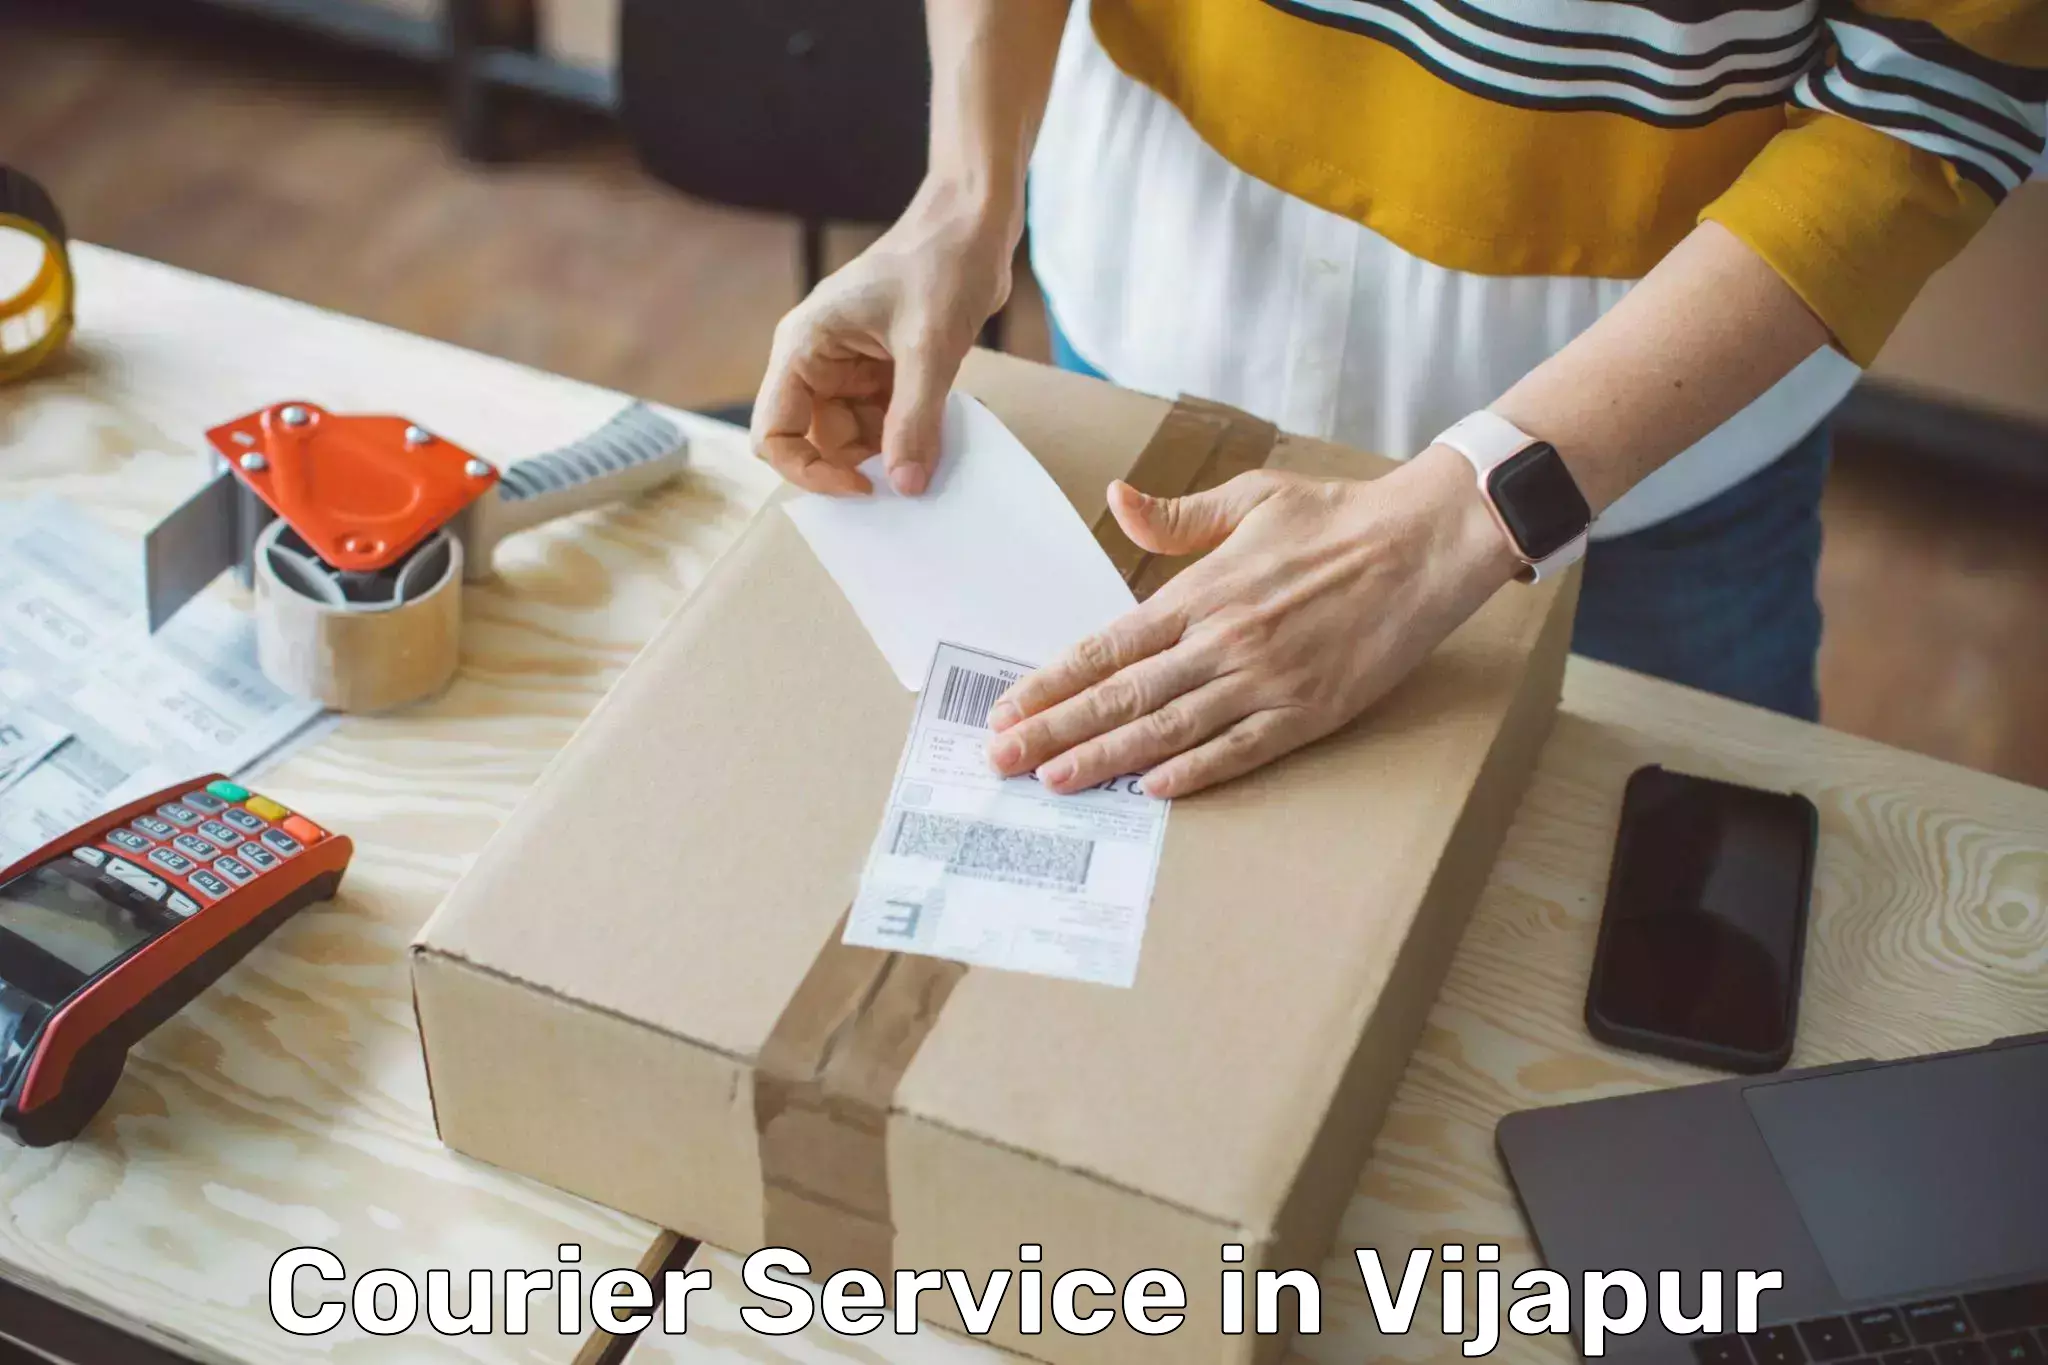 Quick parcel dispatch in Vijapur